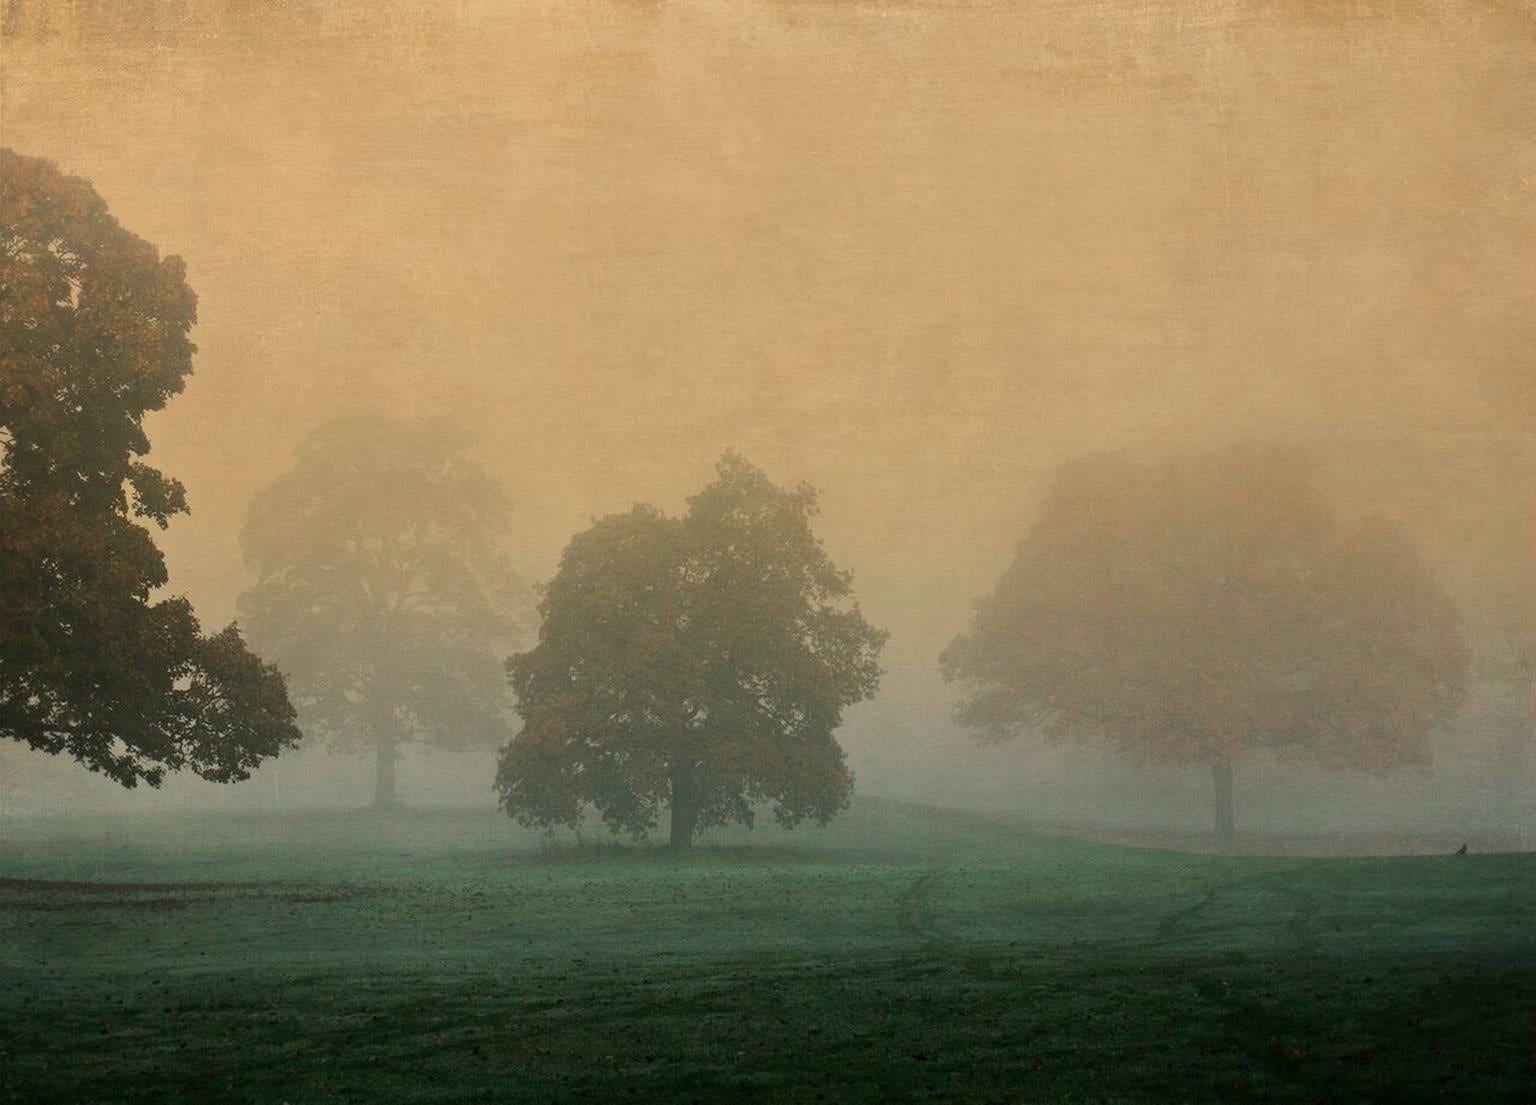 Pete Kelly Landscape Photograph - Brabyns Mist, Cheshire, England, 2015